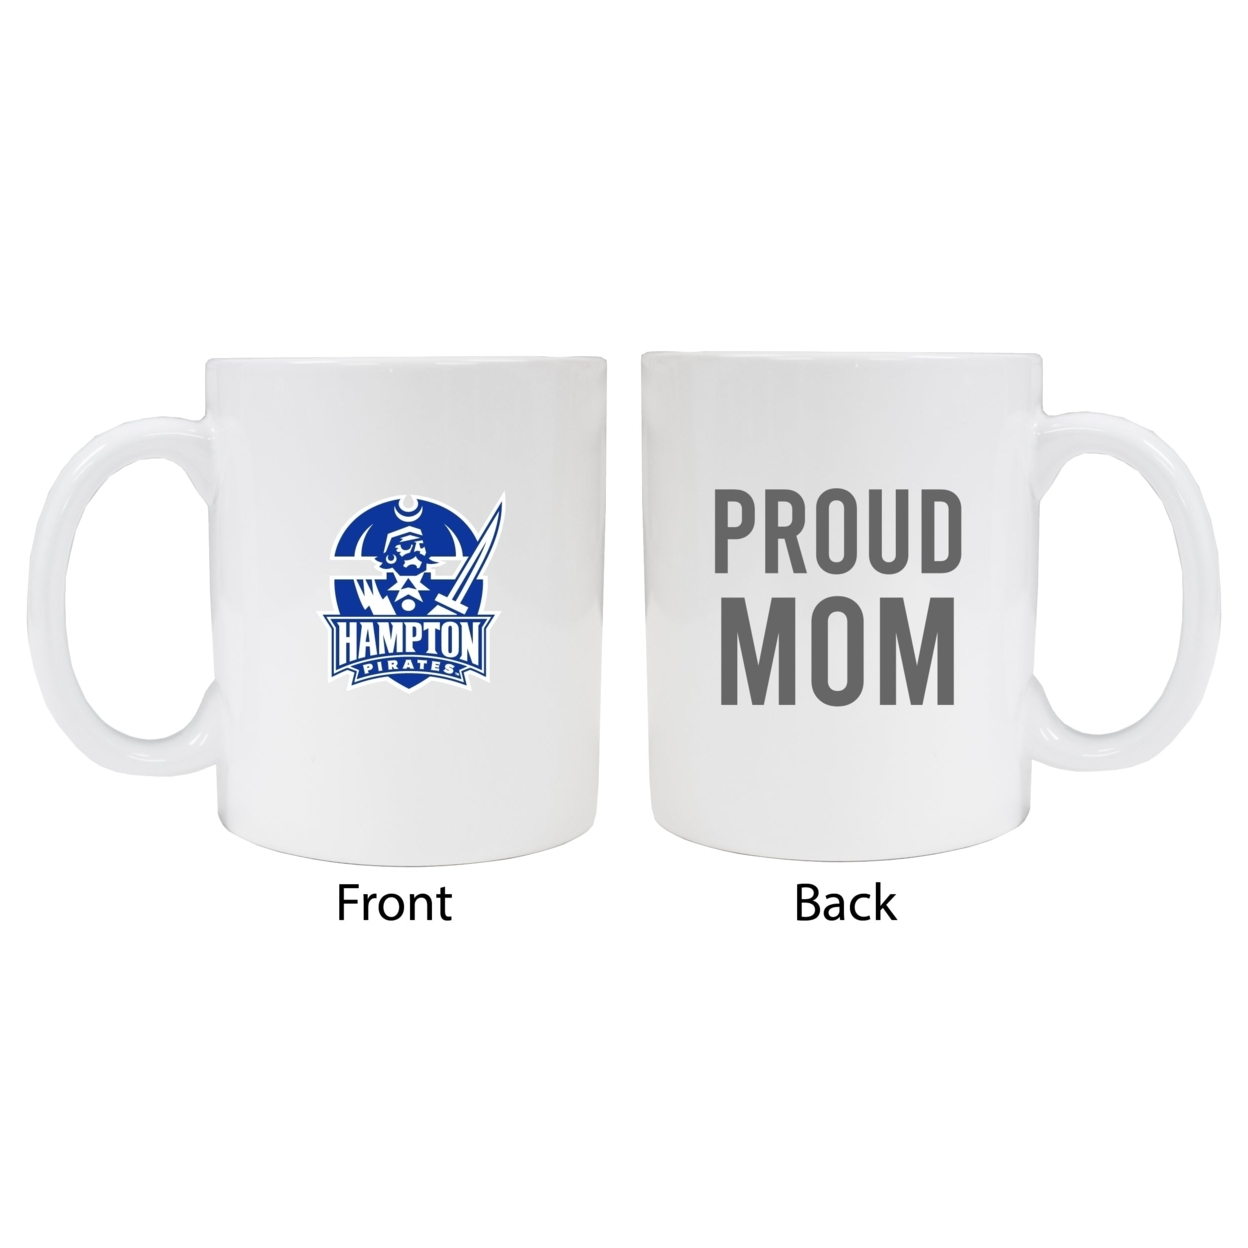 Hampton University Proud Mom Ceramic Coffee Mug - White (2 Pack)